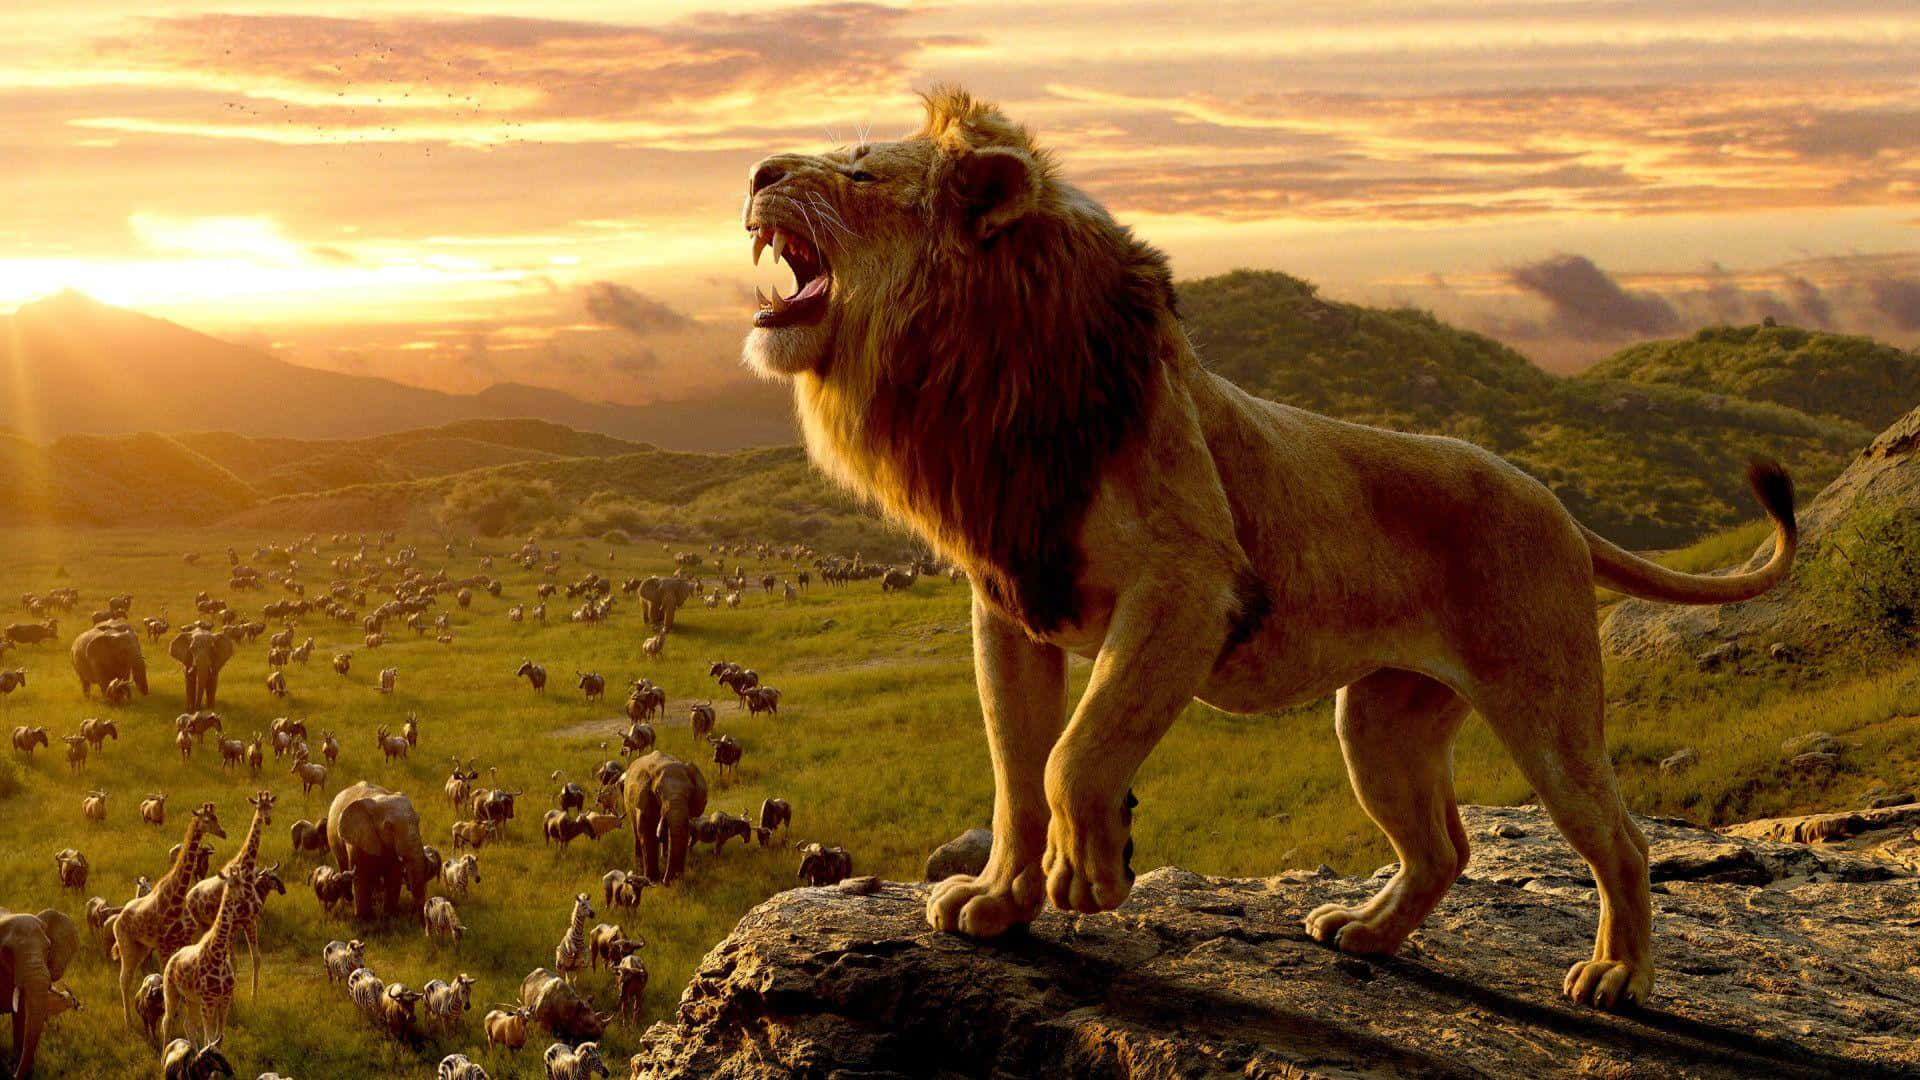 Majestic Lion Roaringat Sunset Background